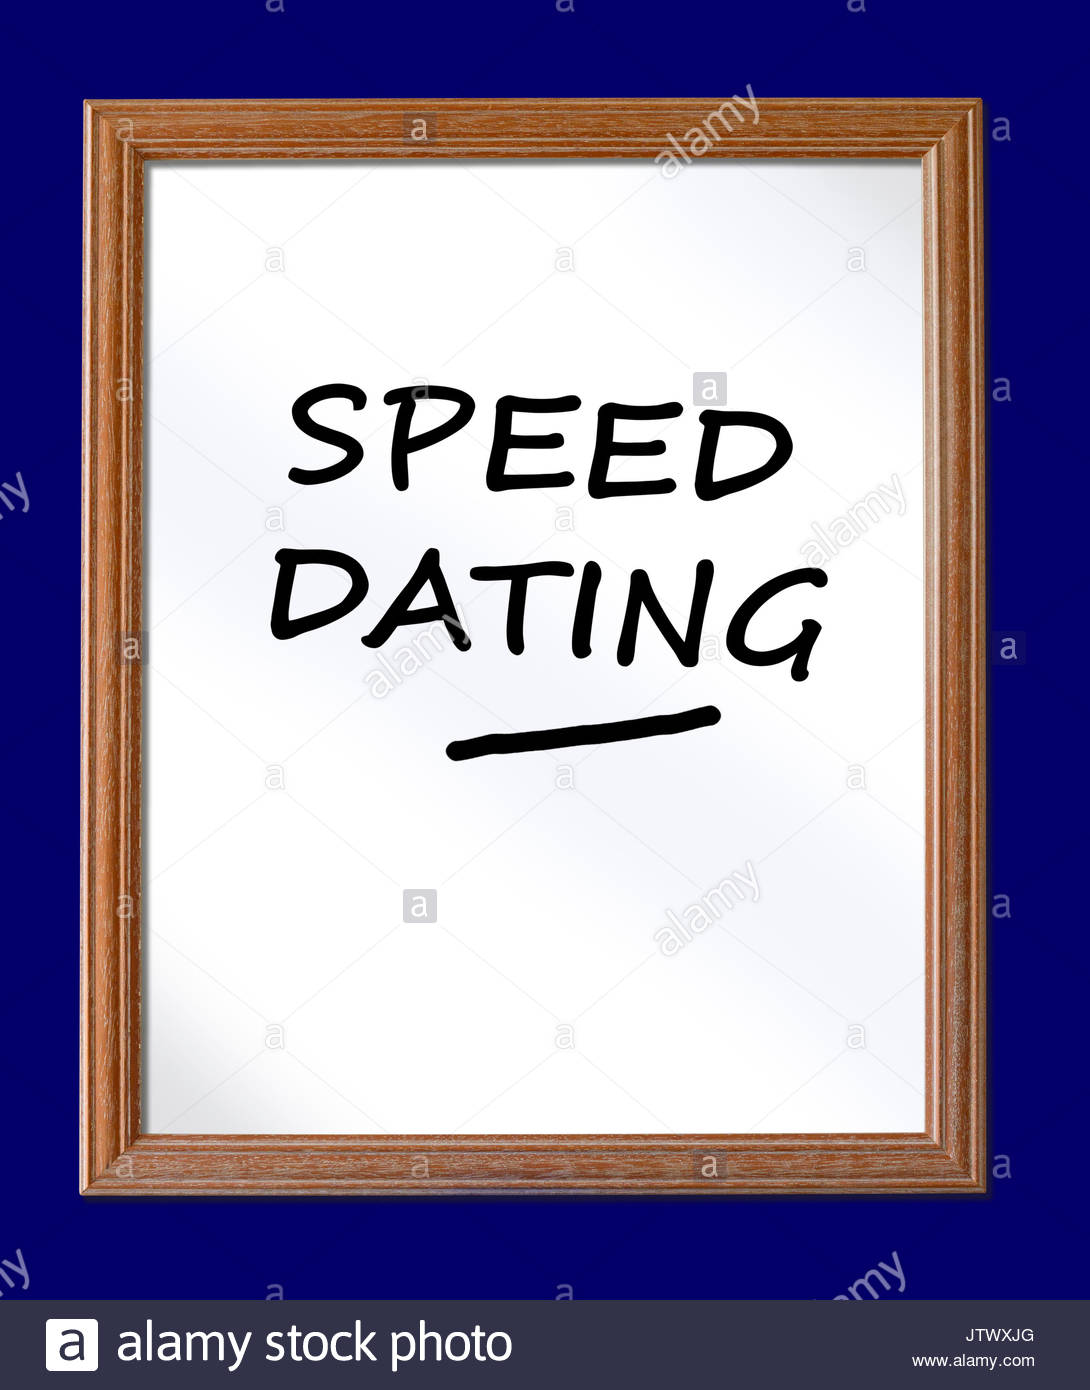 Speed dating england